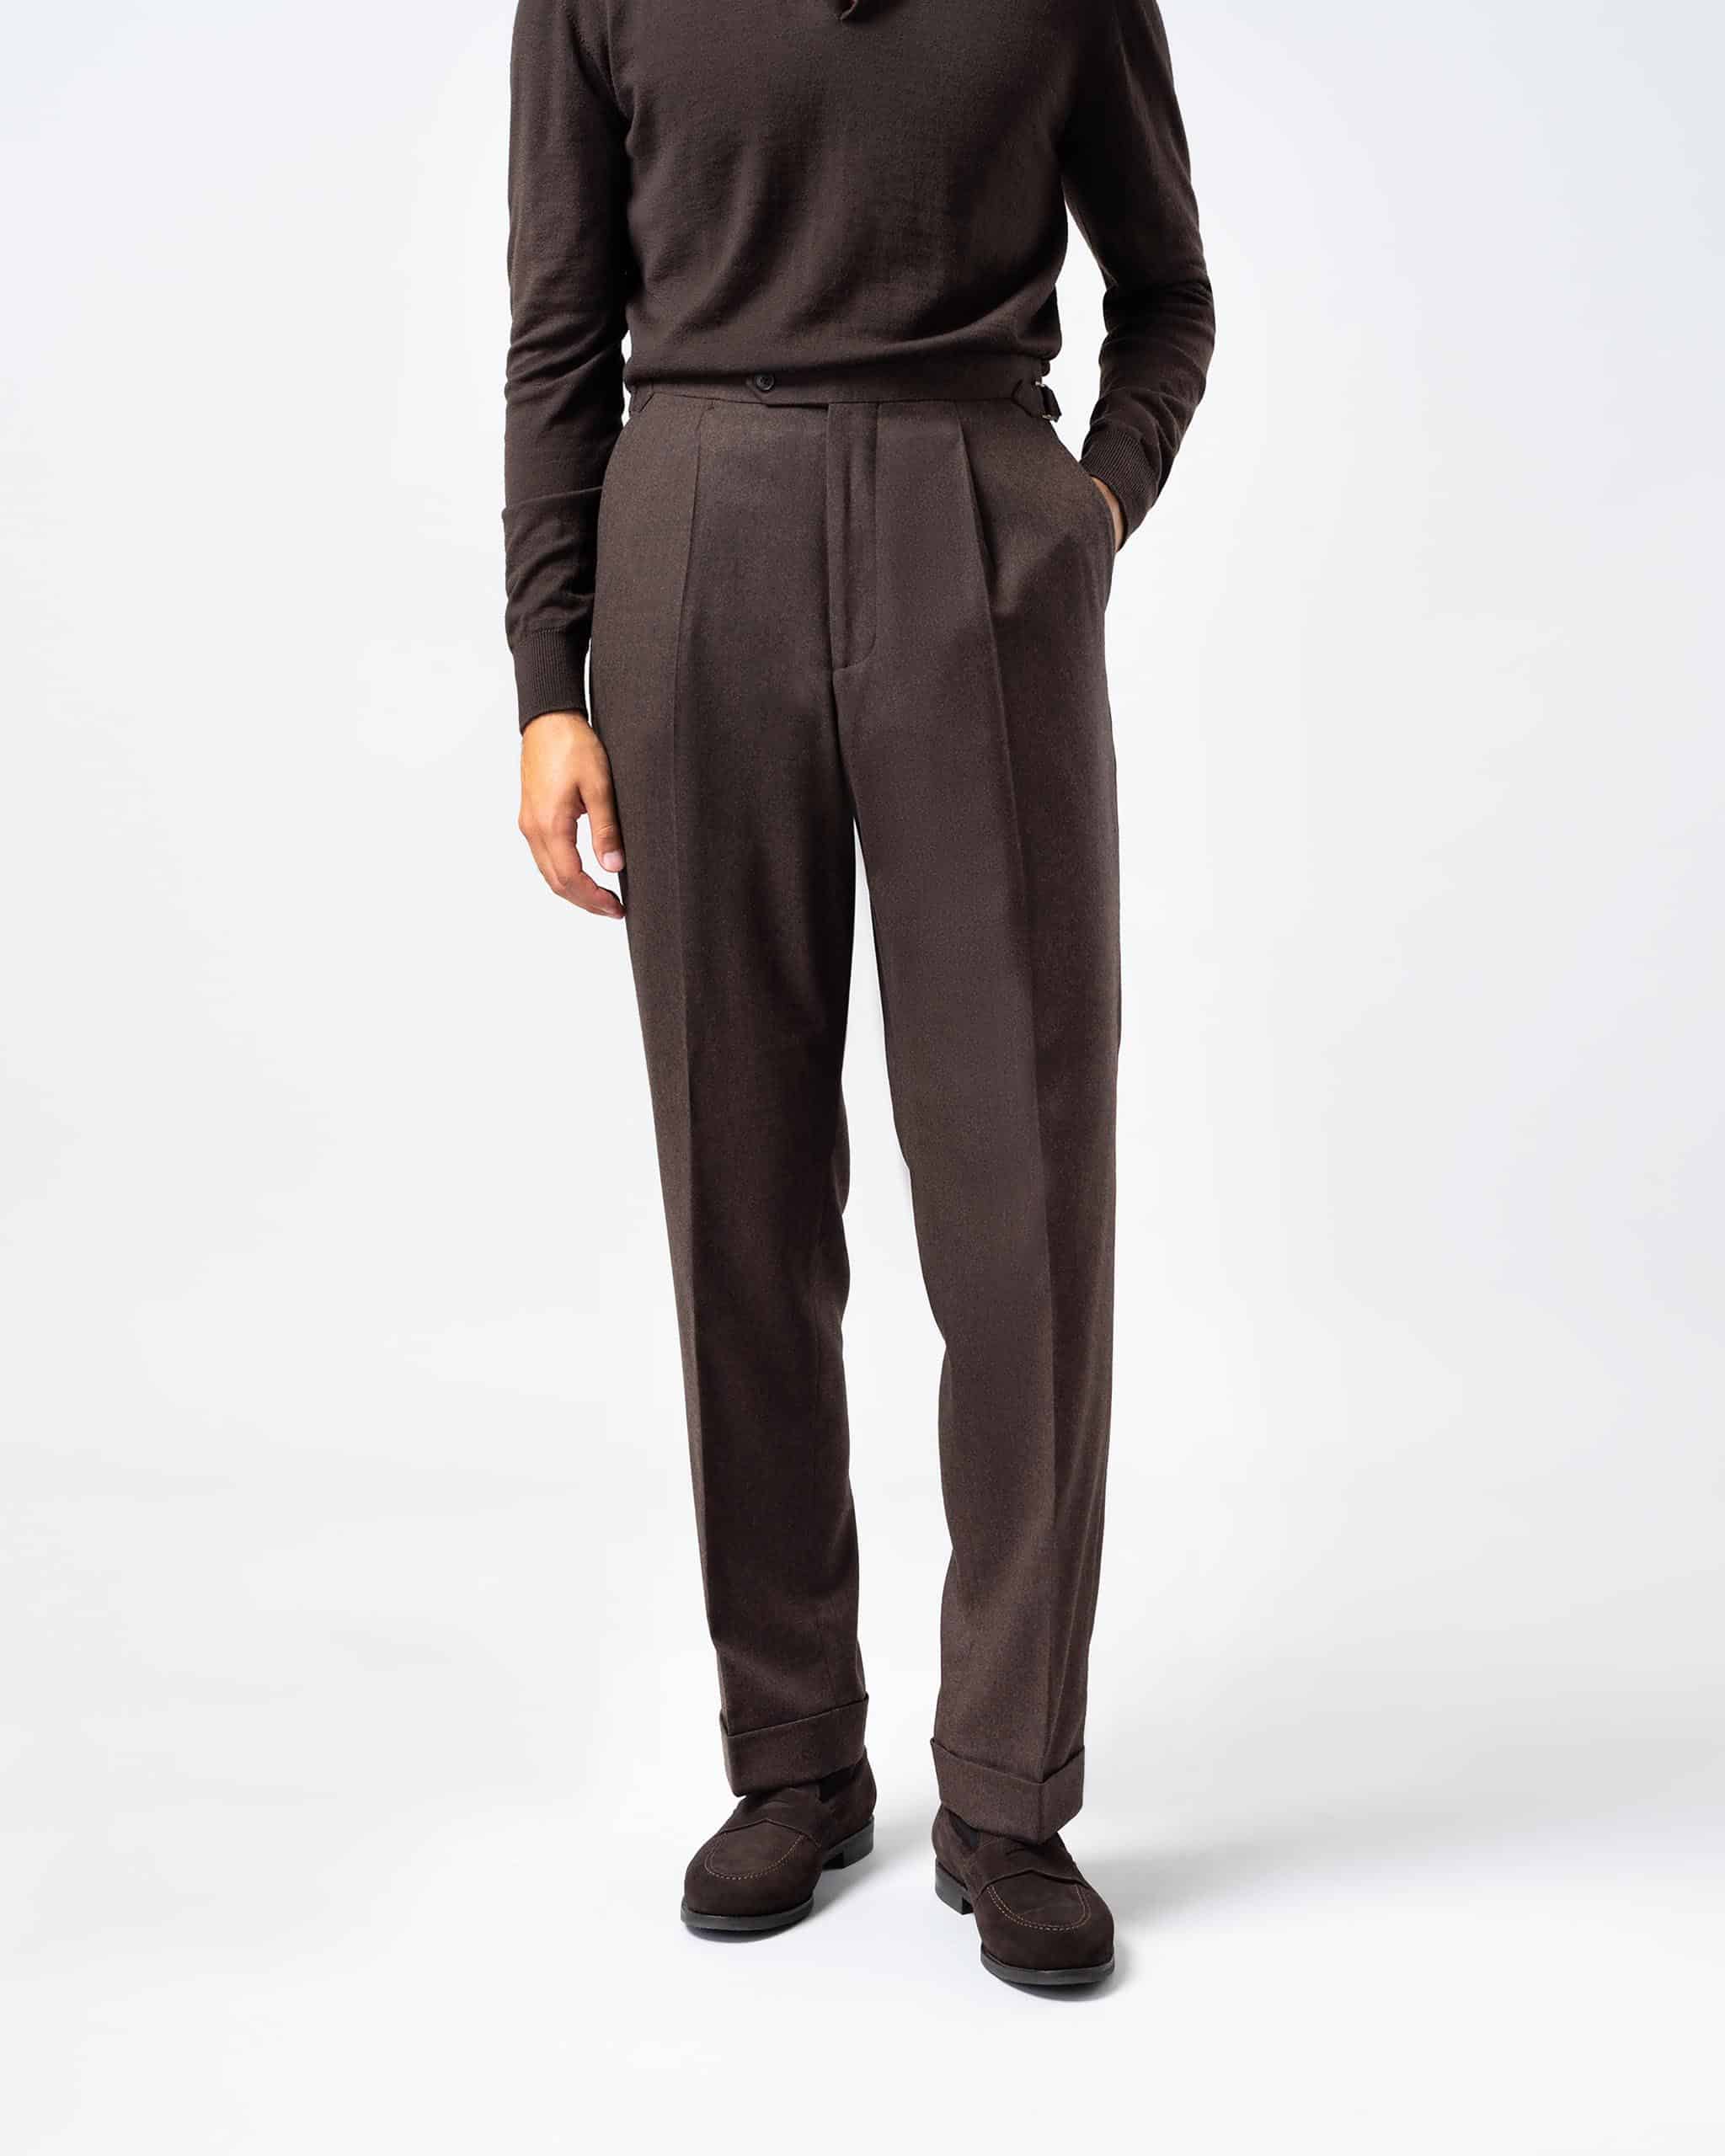 Trousers flannel dark brown image 1